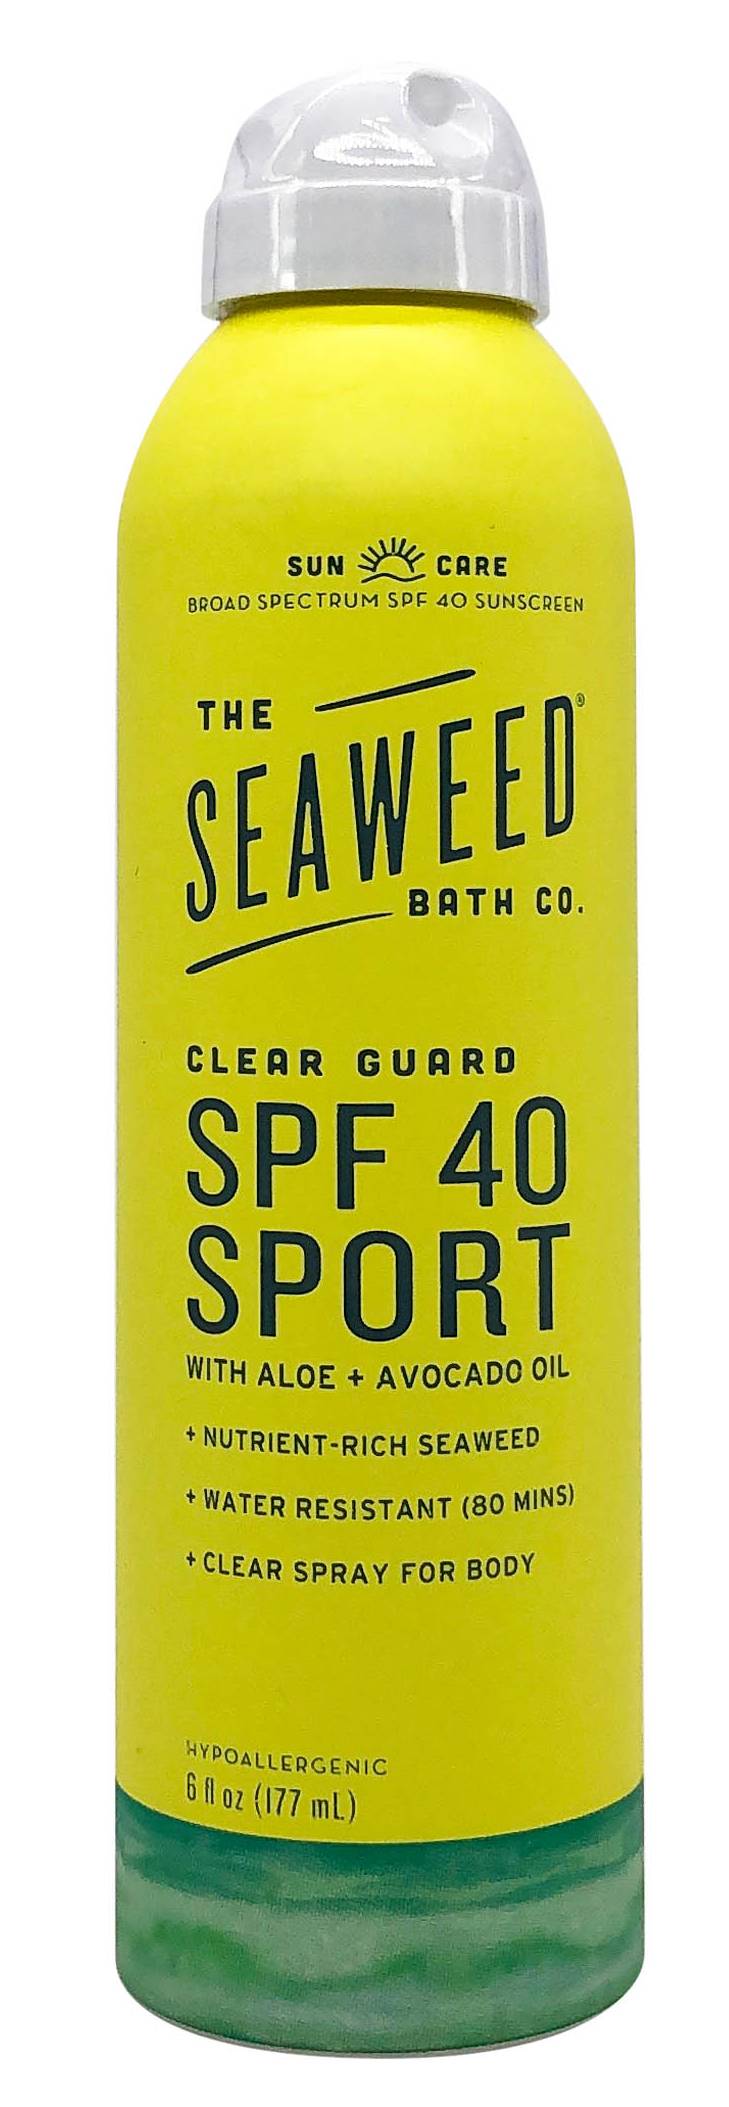 SEAWEED BATH CO: Clear Guard SPF 40 Sport 6 OUNCE